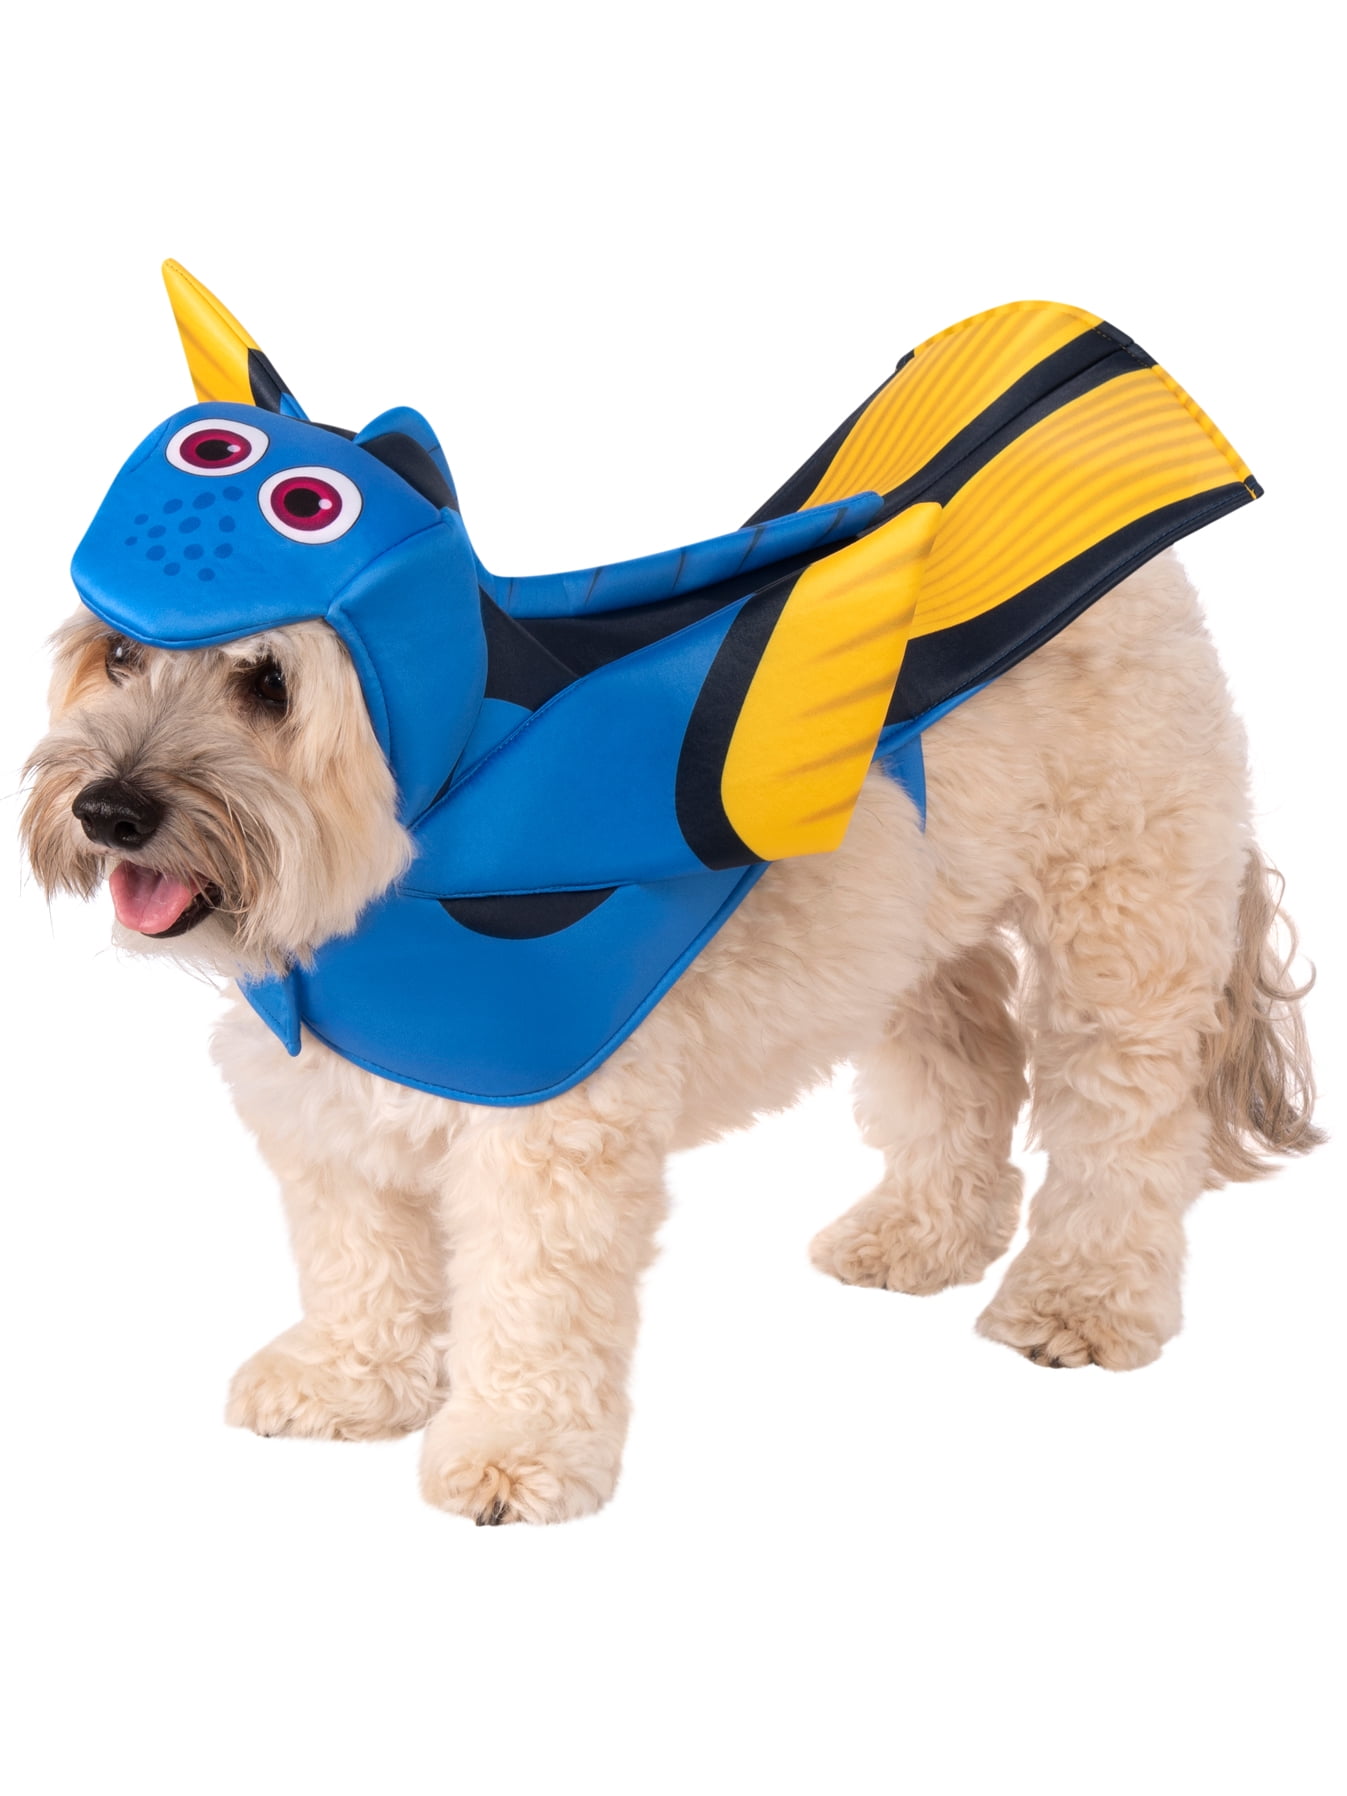 Finding Nemo: Dory Pet Costume 